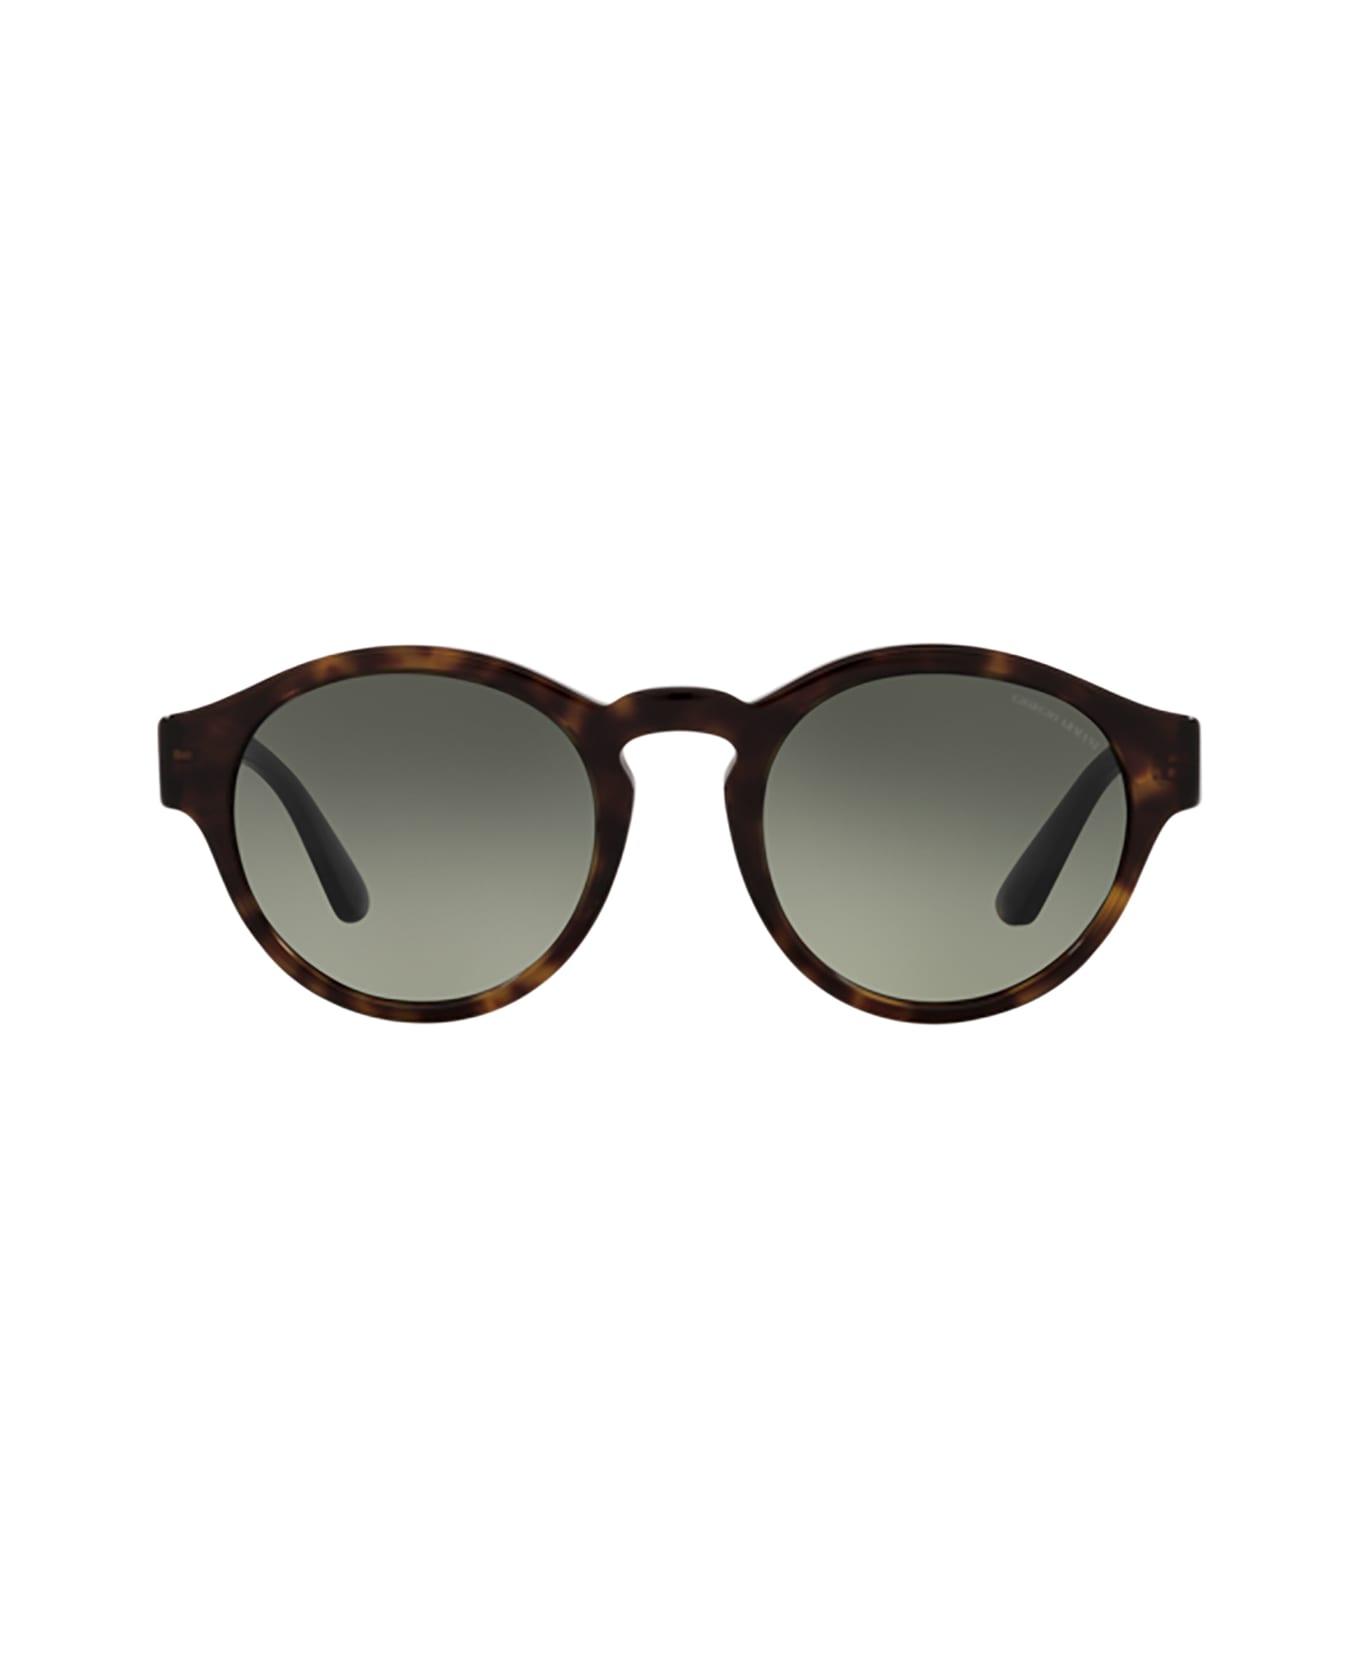 Giorgio Armani Ar8146 Havana Sunglasses - Havana